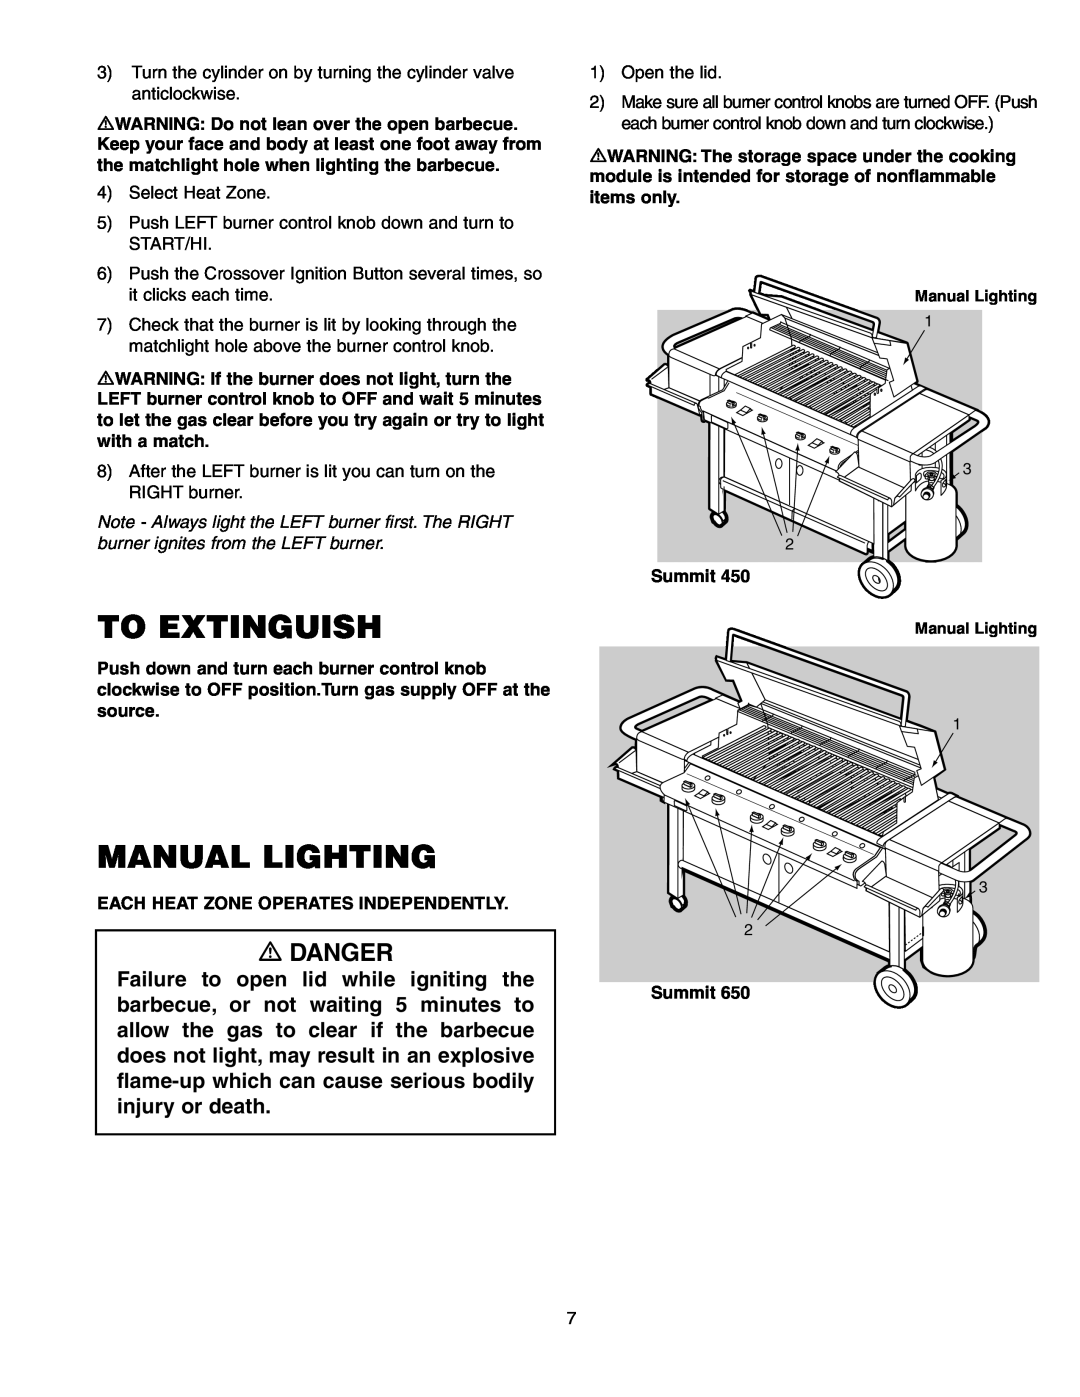 Weber 650 manual To Extinguish, Manual Lighting, Danger 